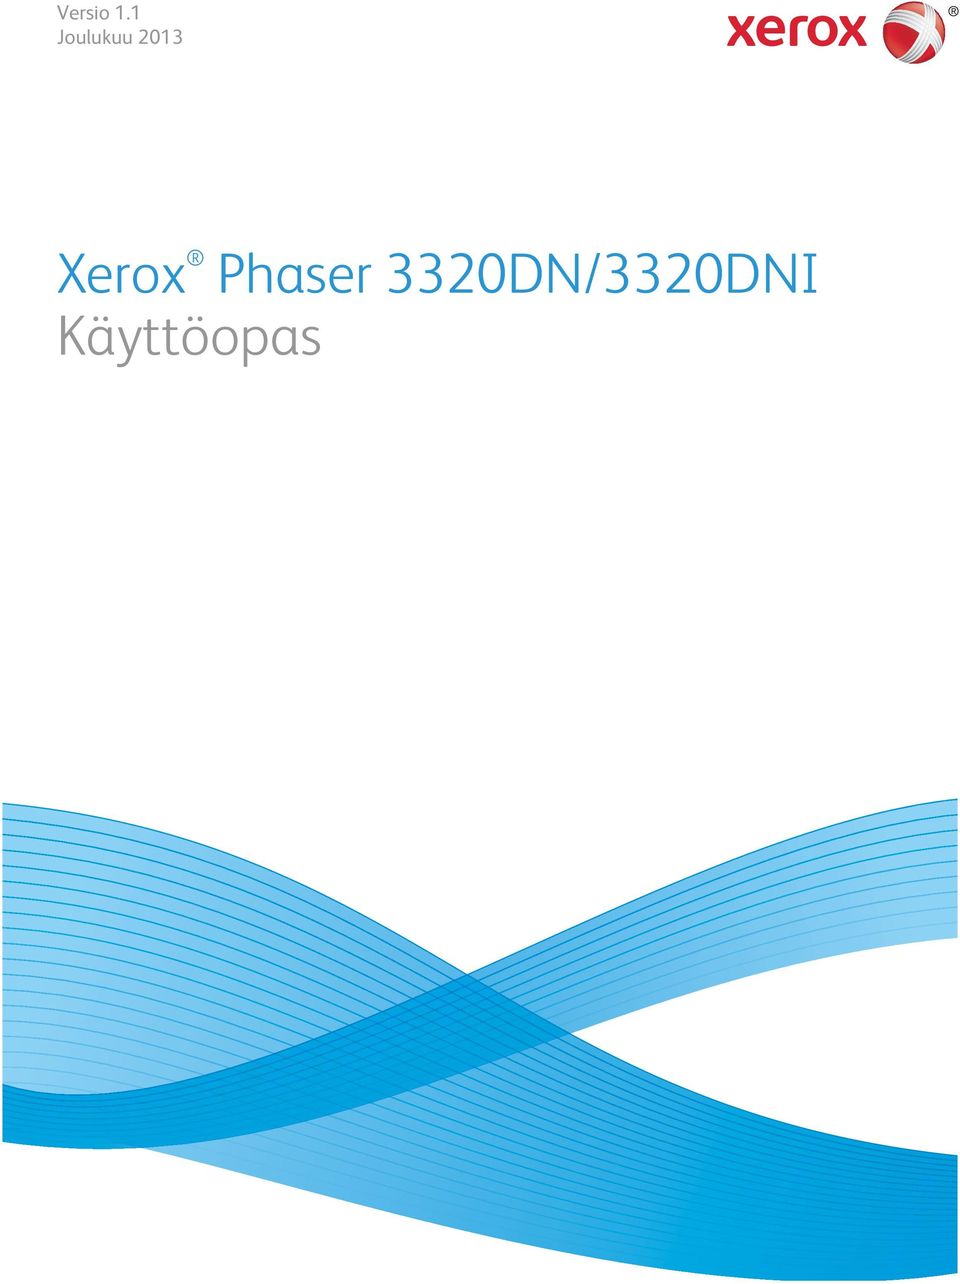 2013 Xerox